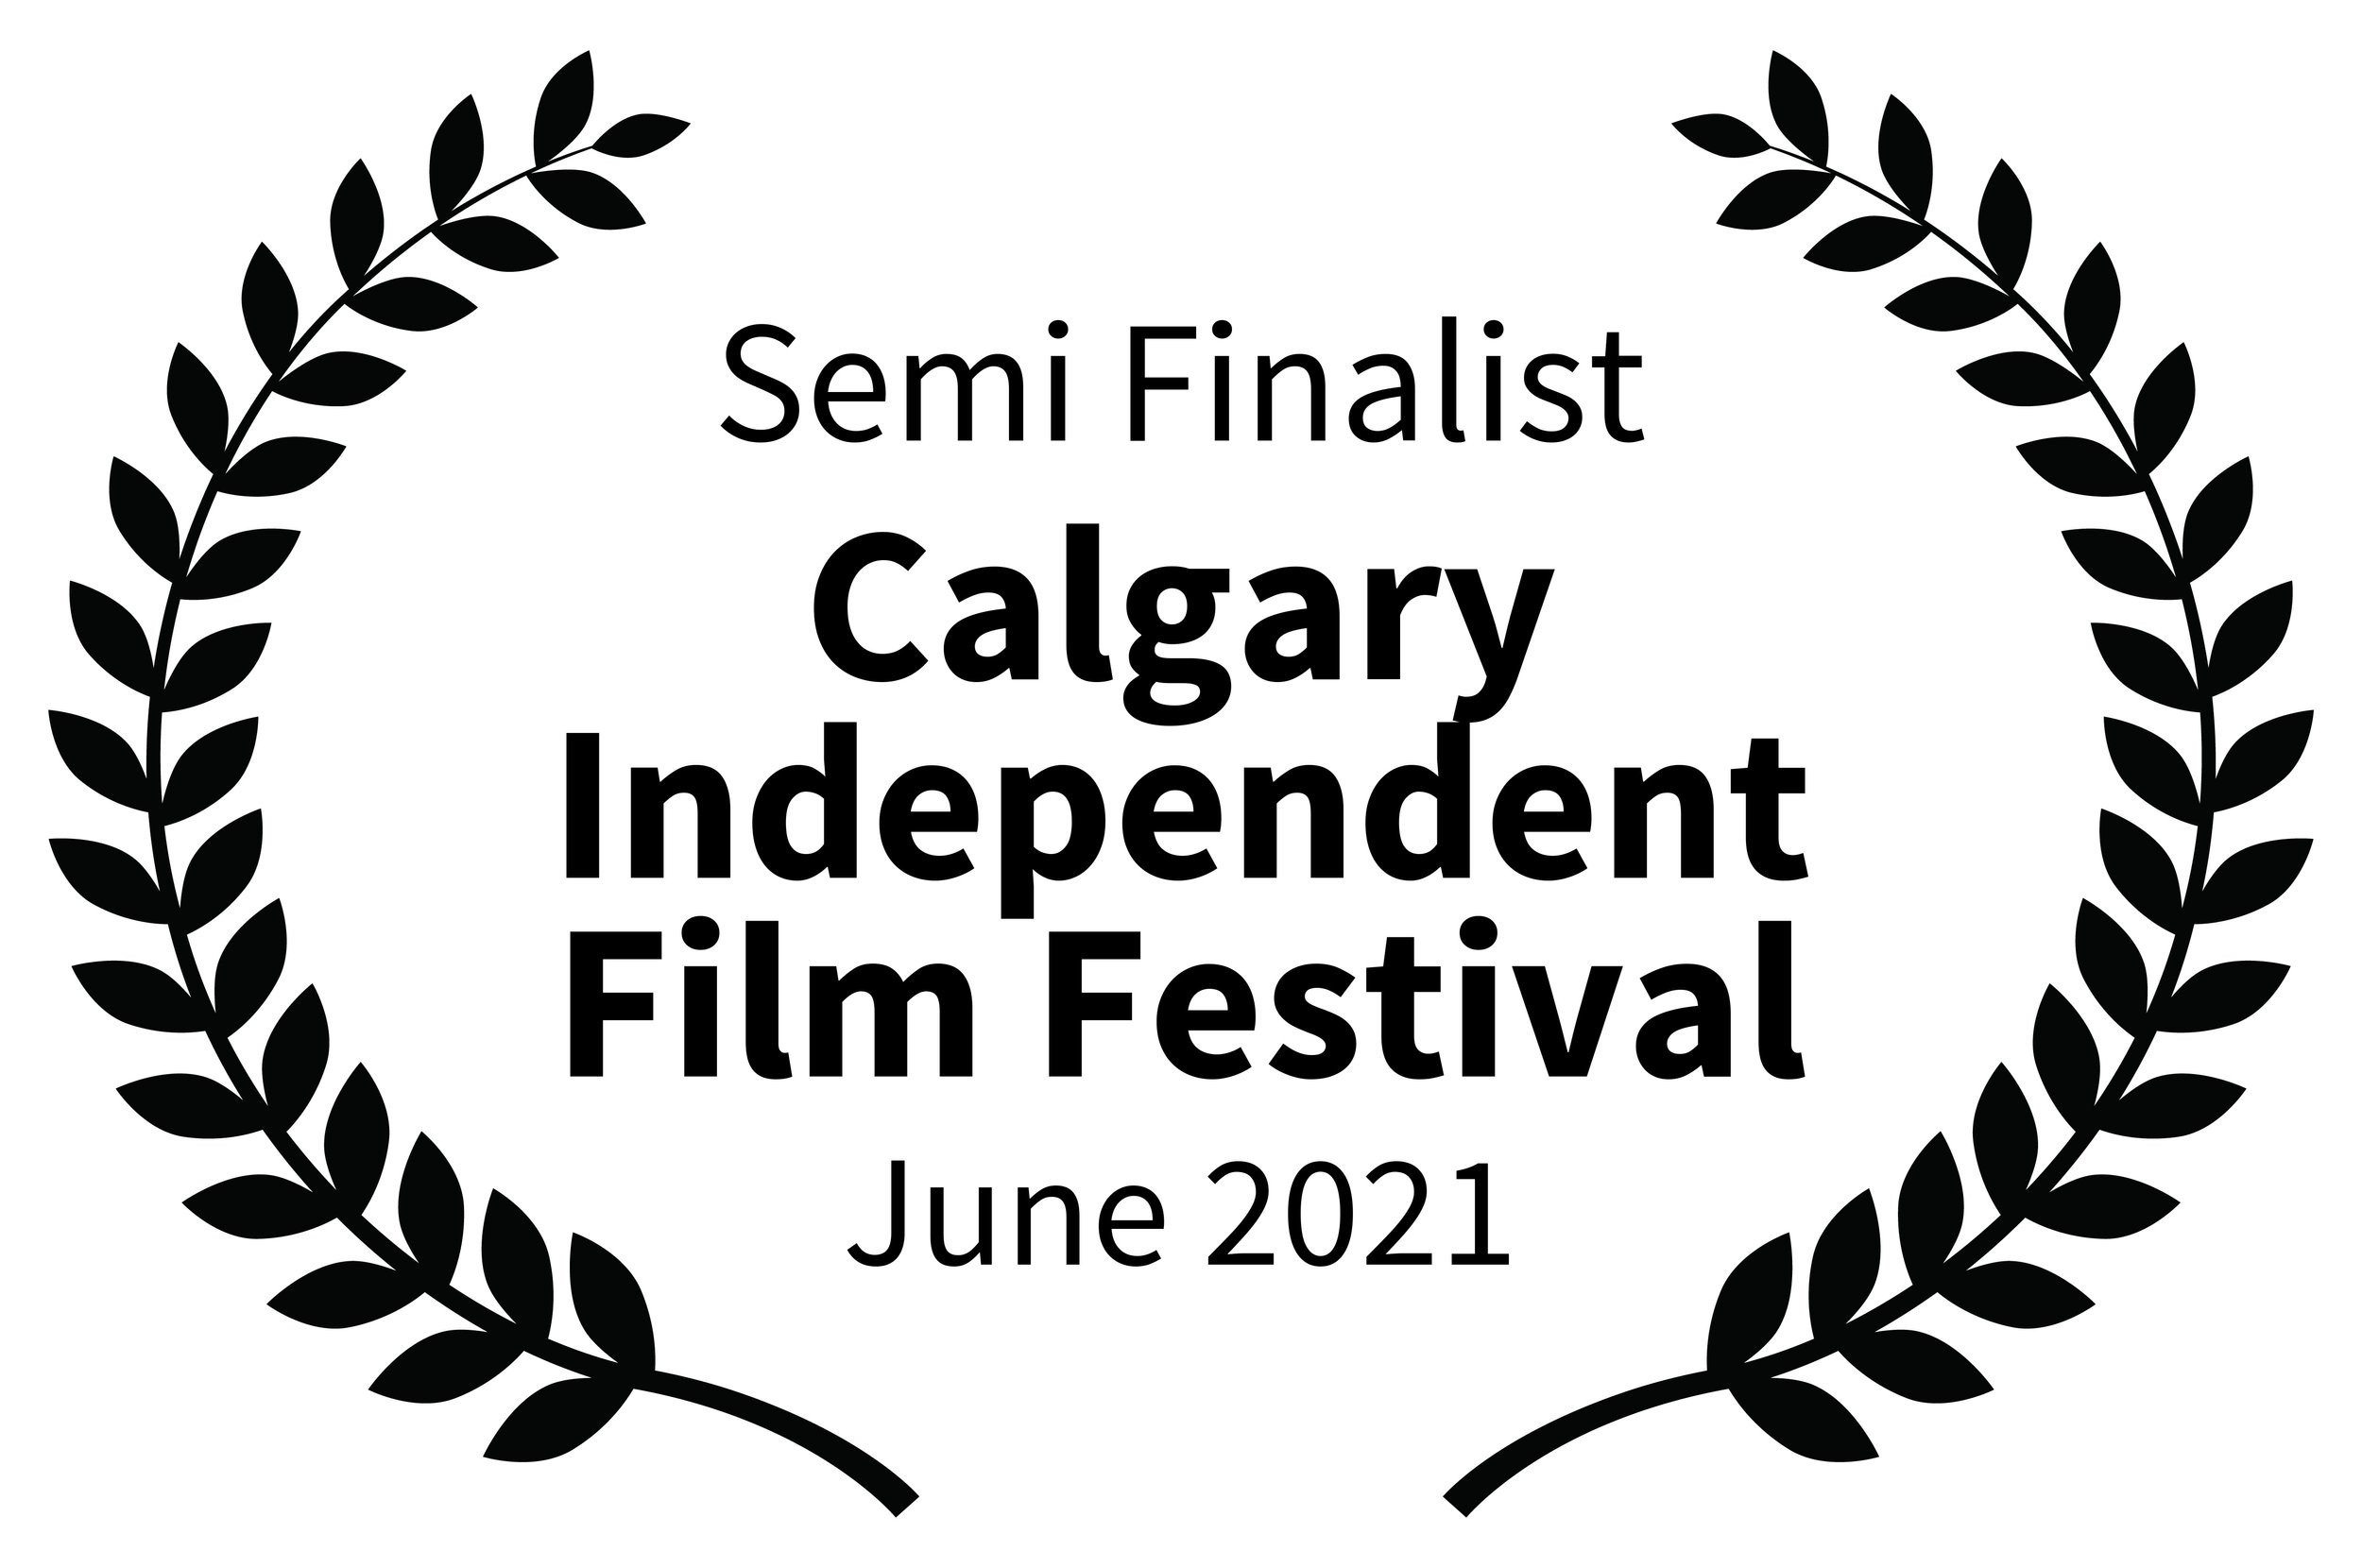 SemiFinalist-CalgaryIndependentFilmFestival-June2021.jpg